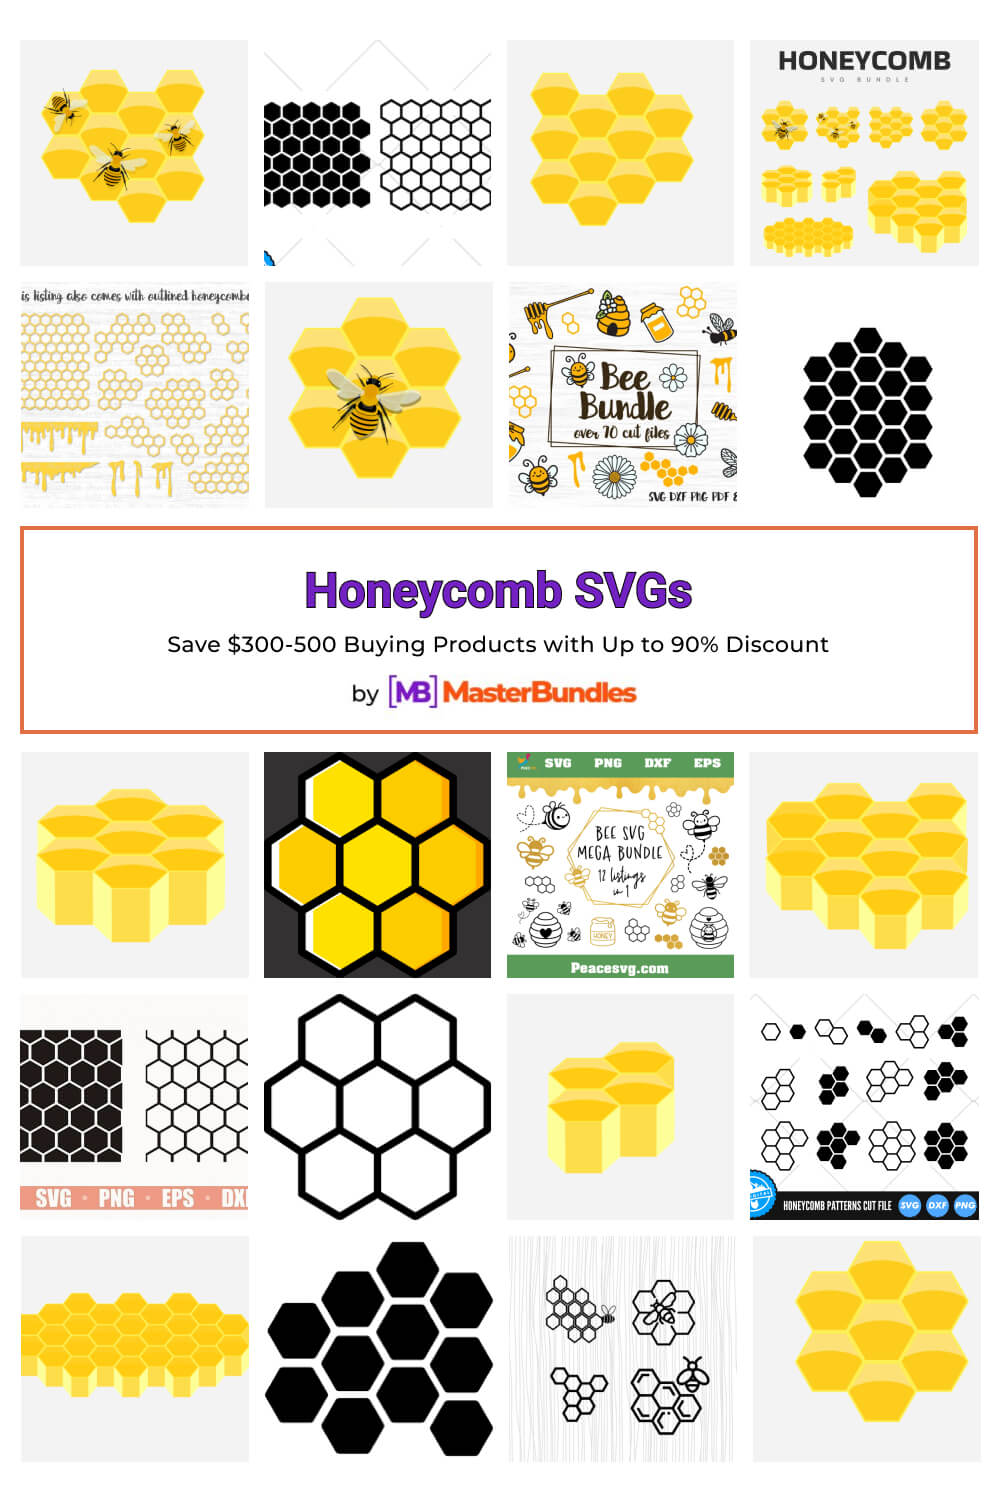 honeycomb svgs pinterest image.